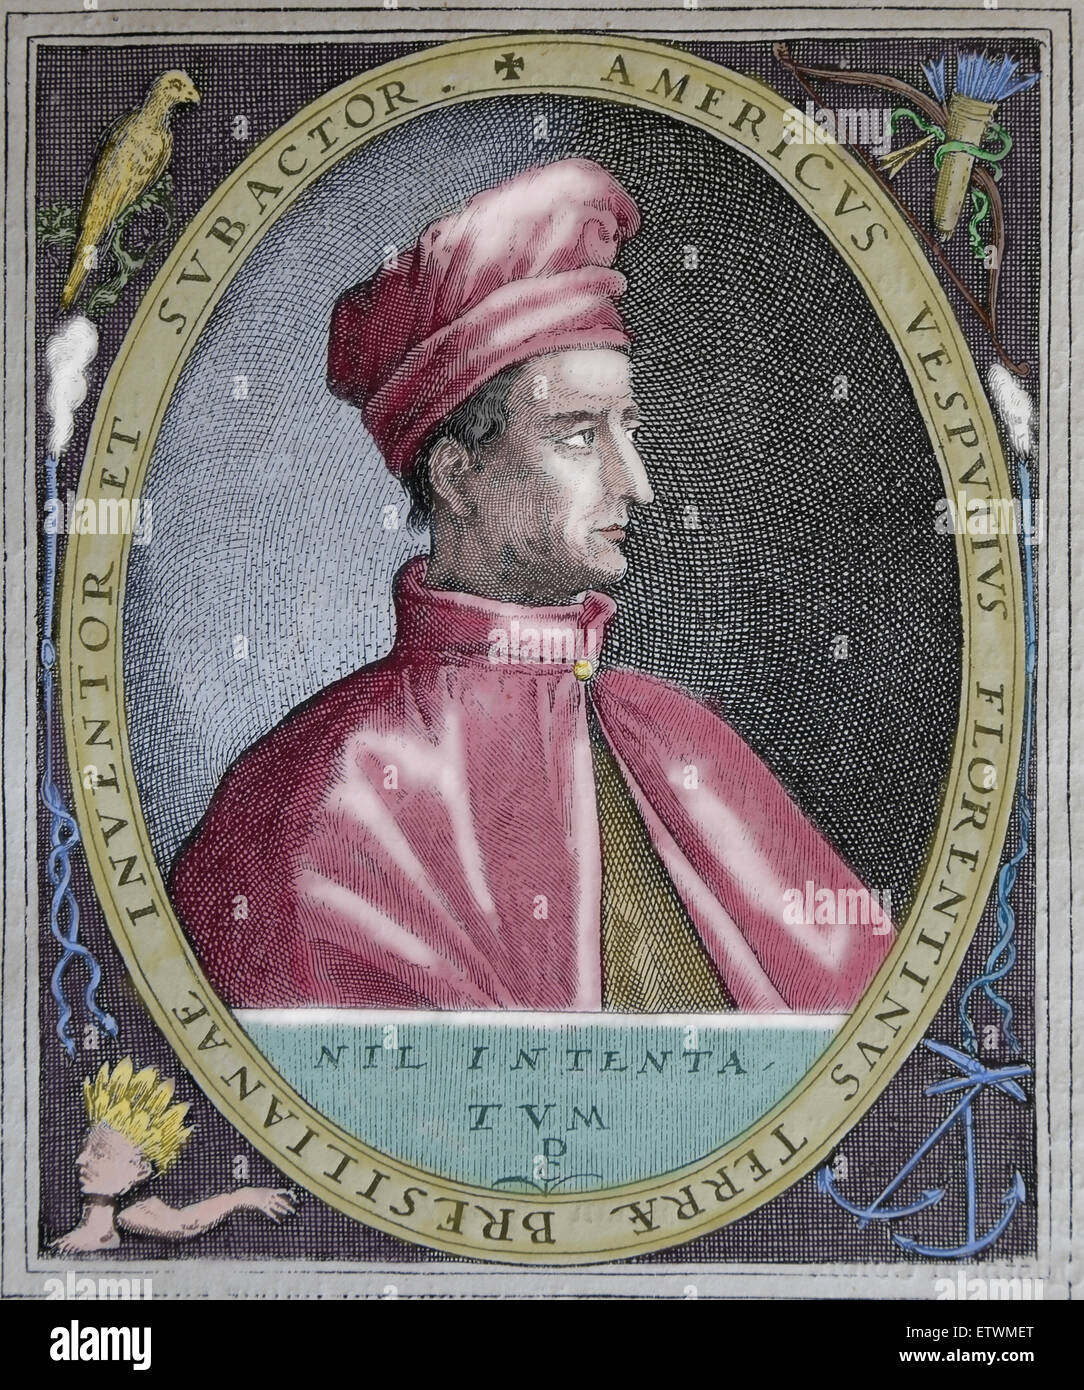 Amerigo Vespucci (1454-1512). Italienische Entdecker, Finanzier, Navigator und Kartograph. Porträt. Farbe. Stockfoto